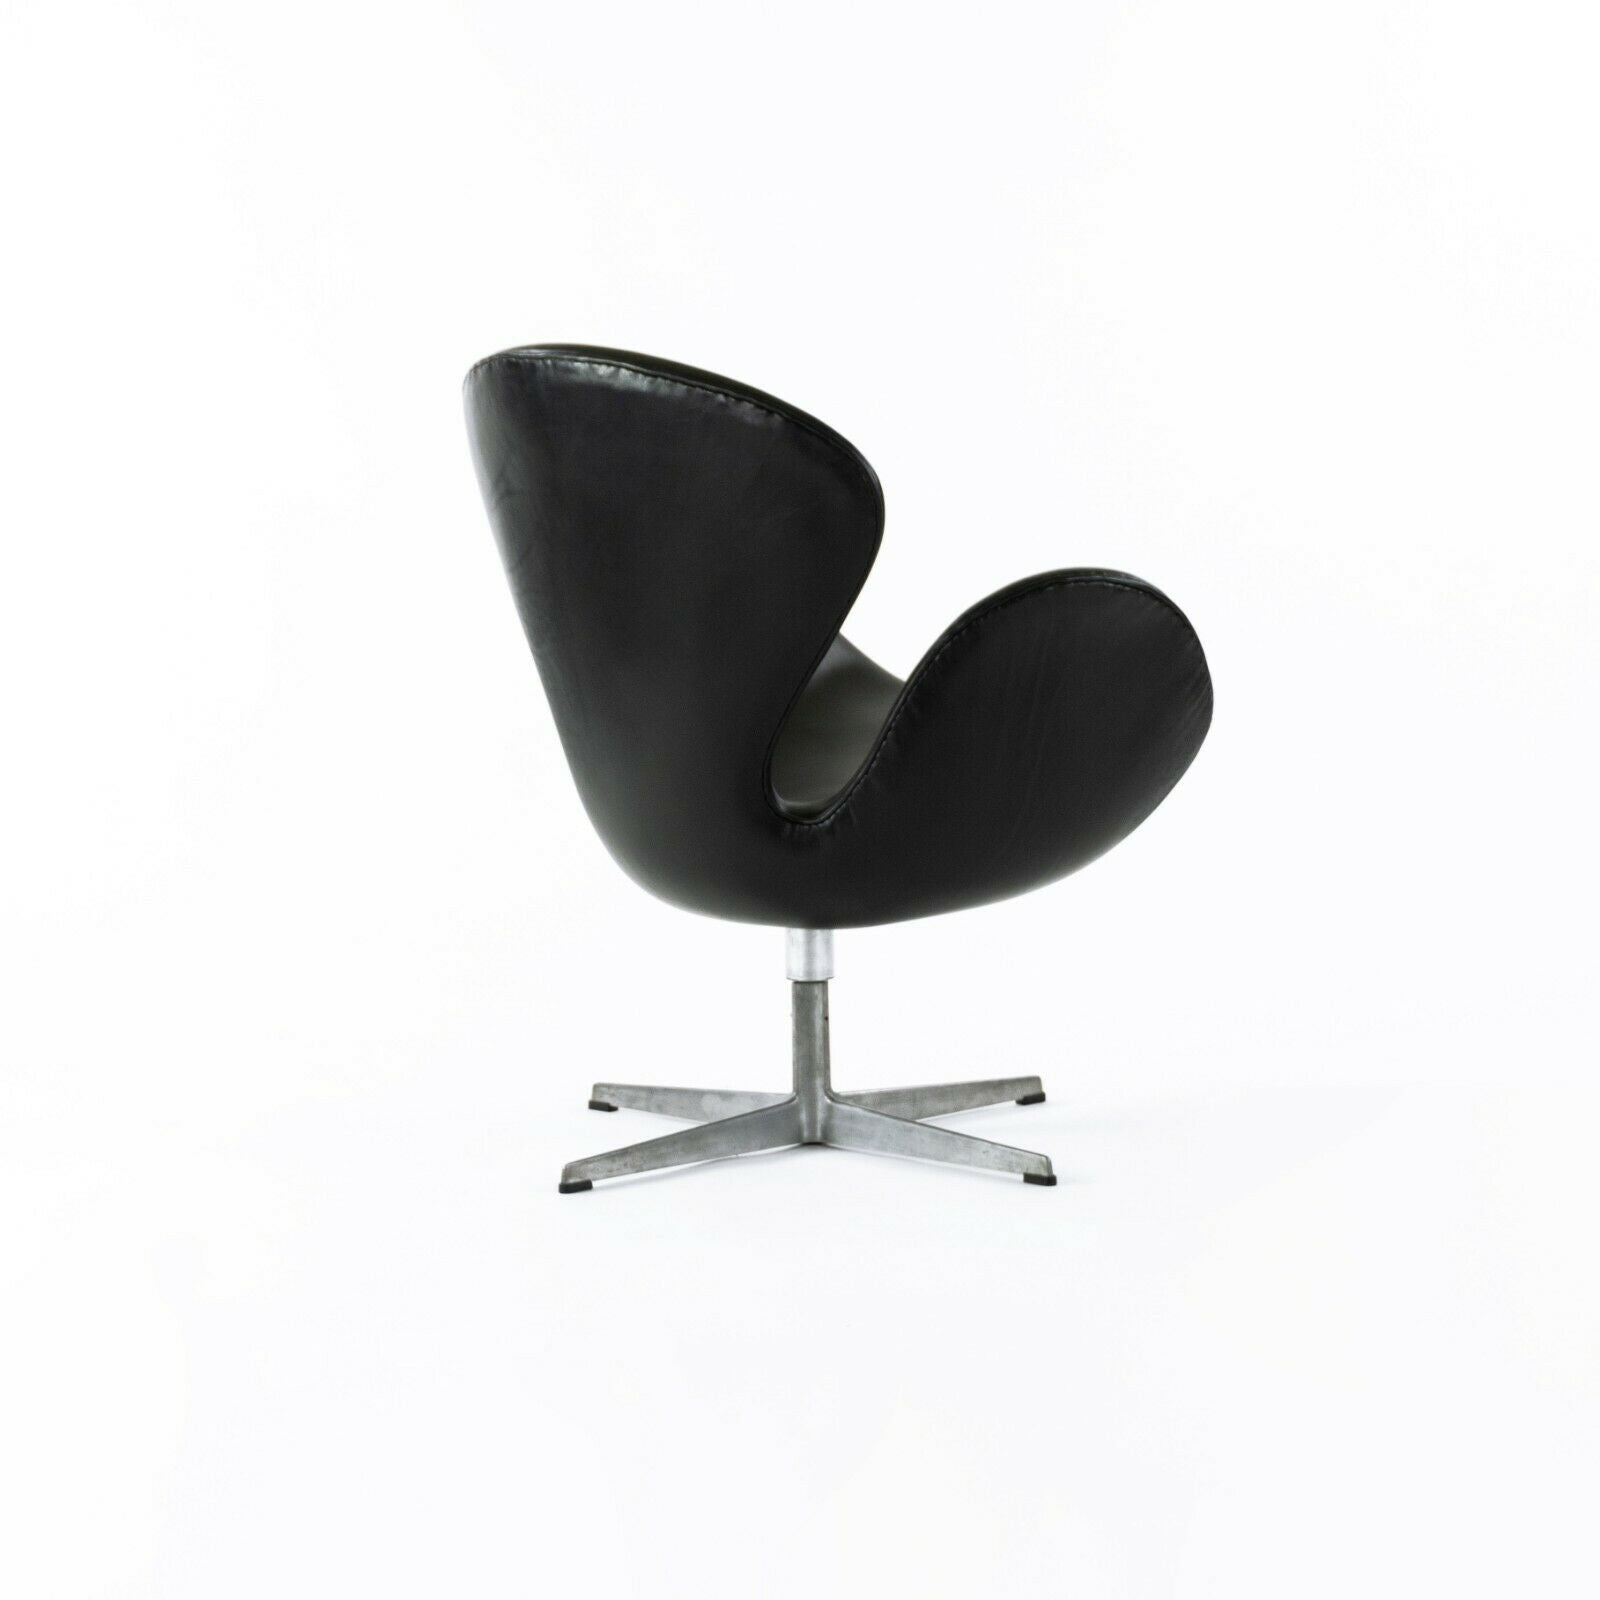 1960s Arne Jacobsen Swan Chair by Fritz Hansen of Denmark in Black Leather